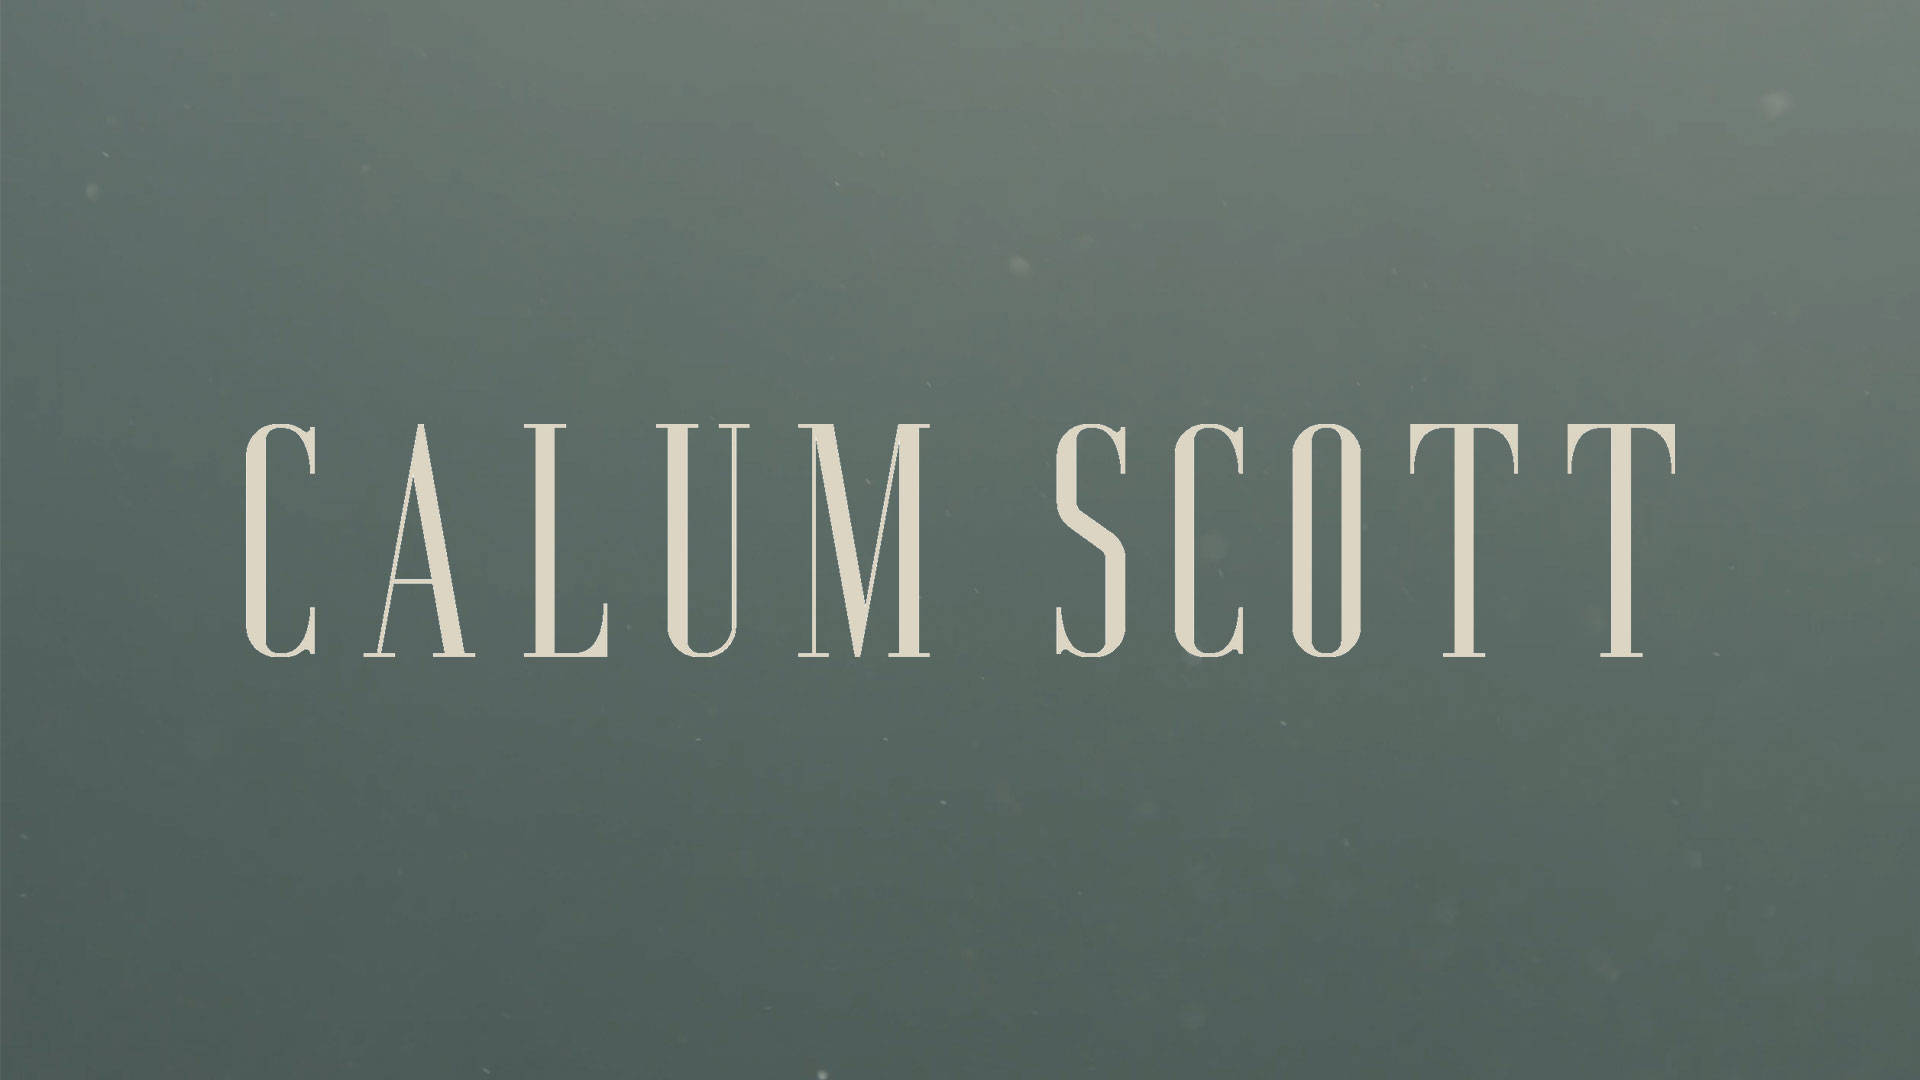 Calum Scott Name Banner Wallpaper